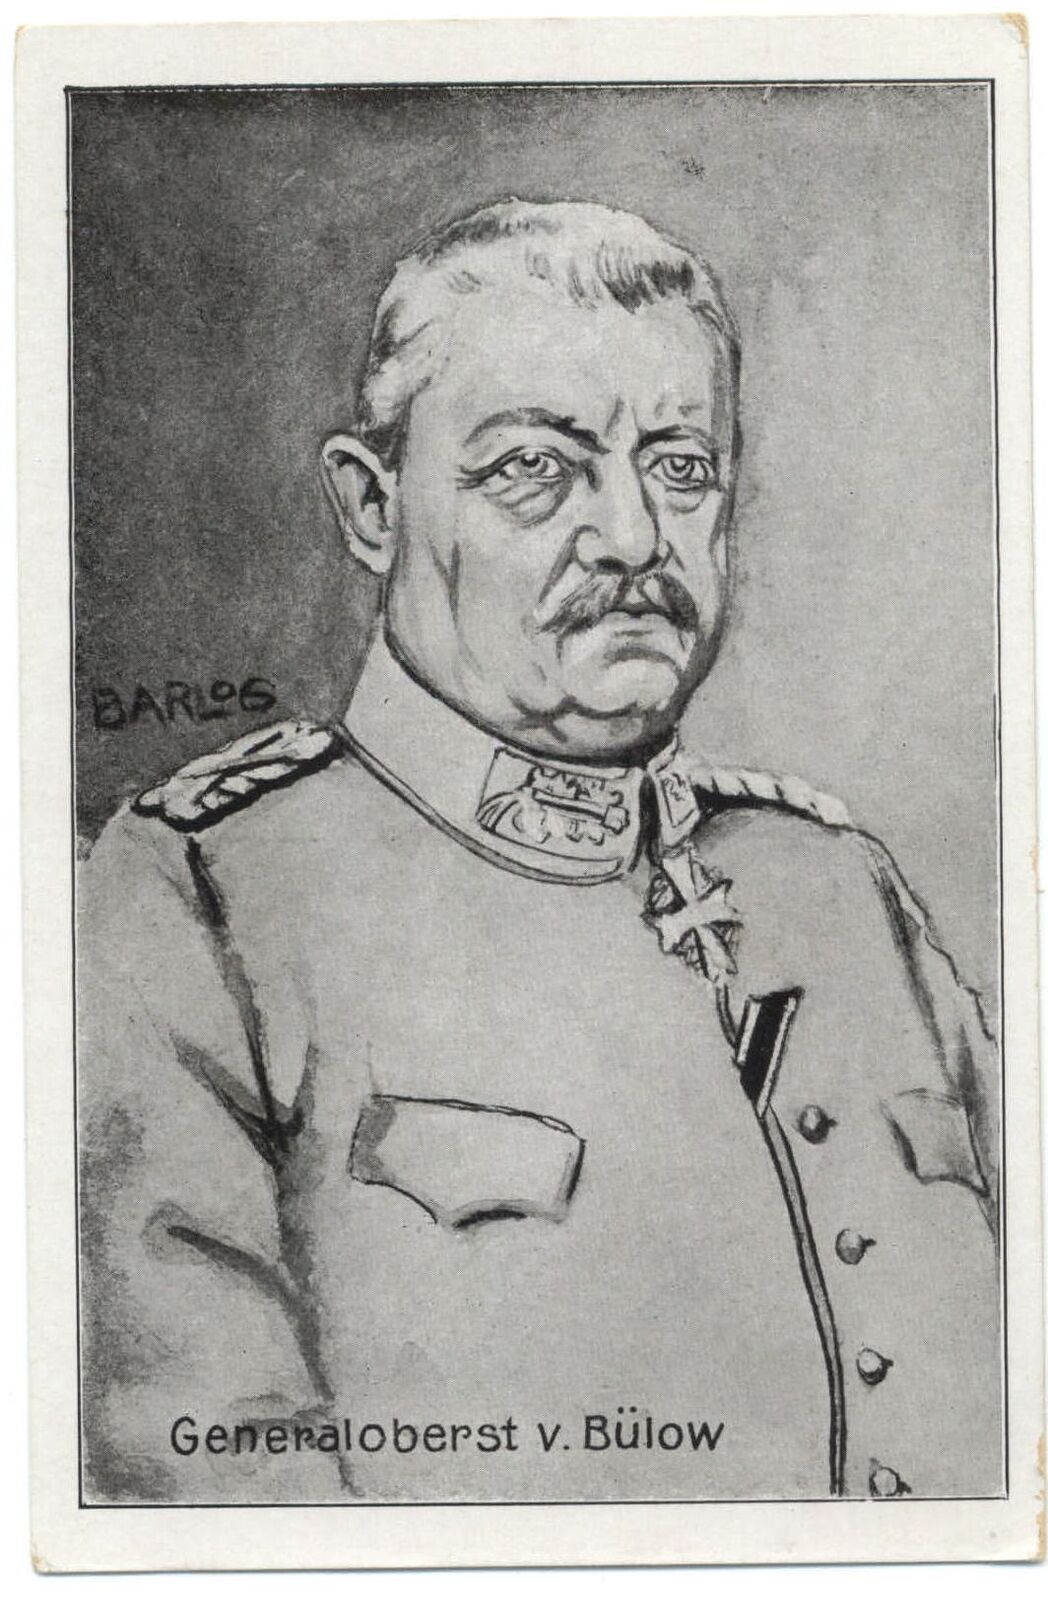 WWI General Field Marshal karl von Bulow ~ artist portrait signed Barlos?